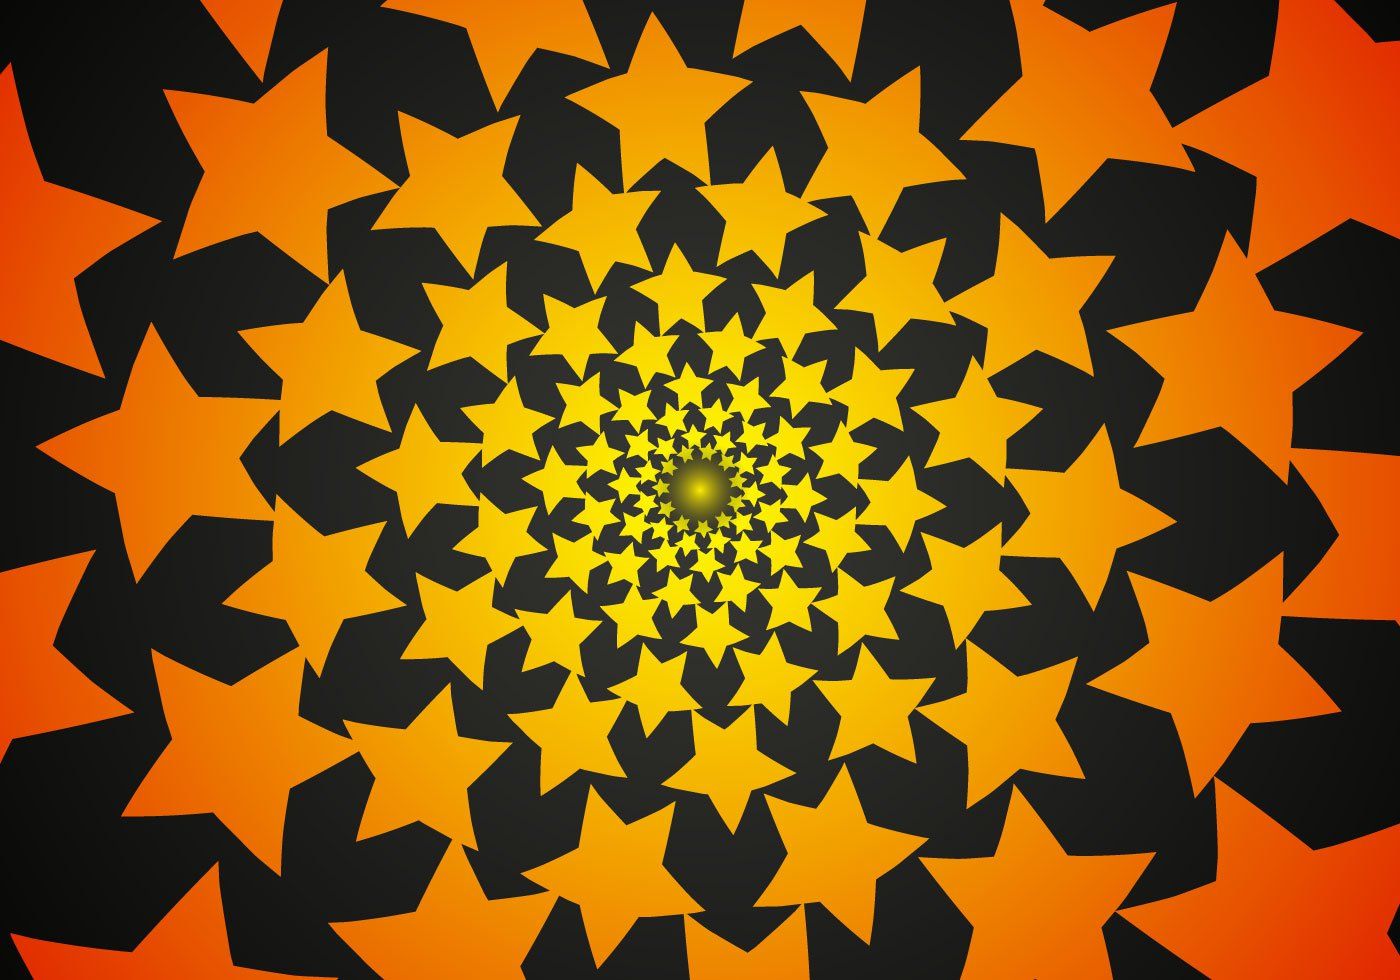 Star Pattern Free Vector Art - (5915 Free Downloads)